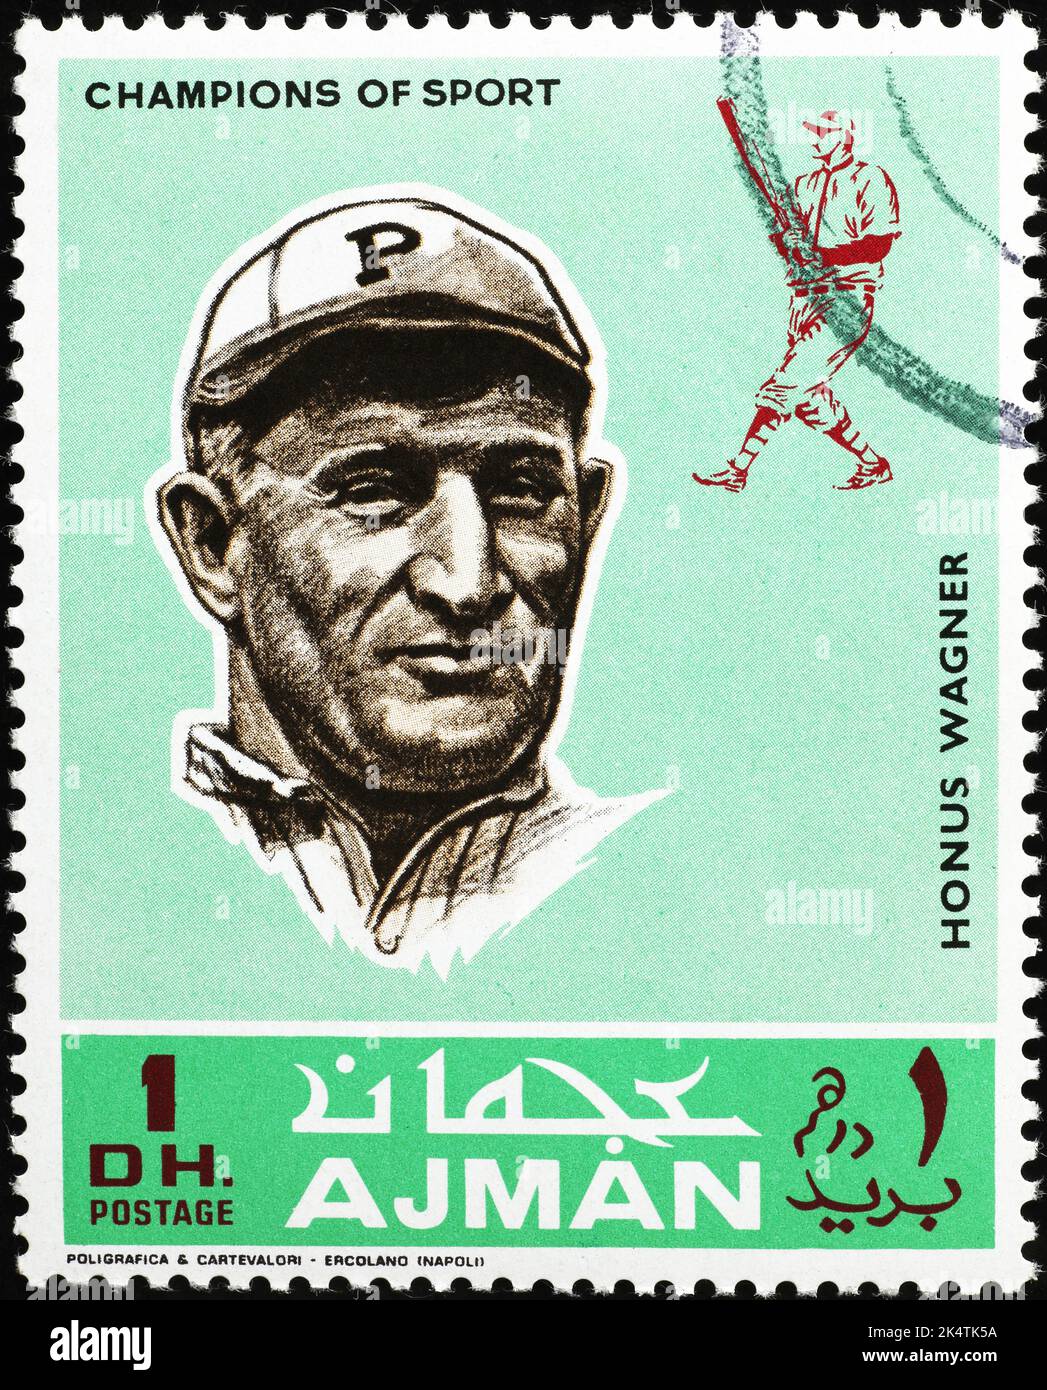 Baseball player Honus Wagner on postage stamp of Ajman Stock Photo